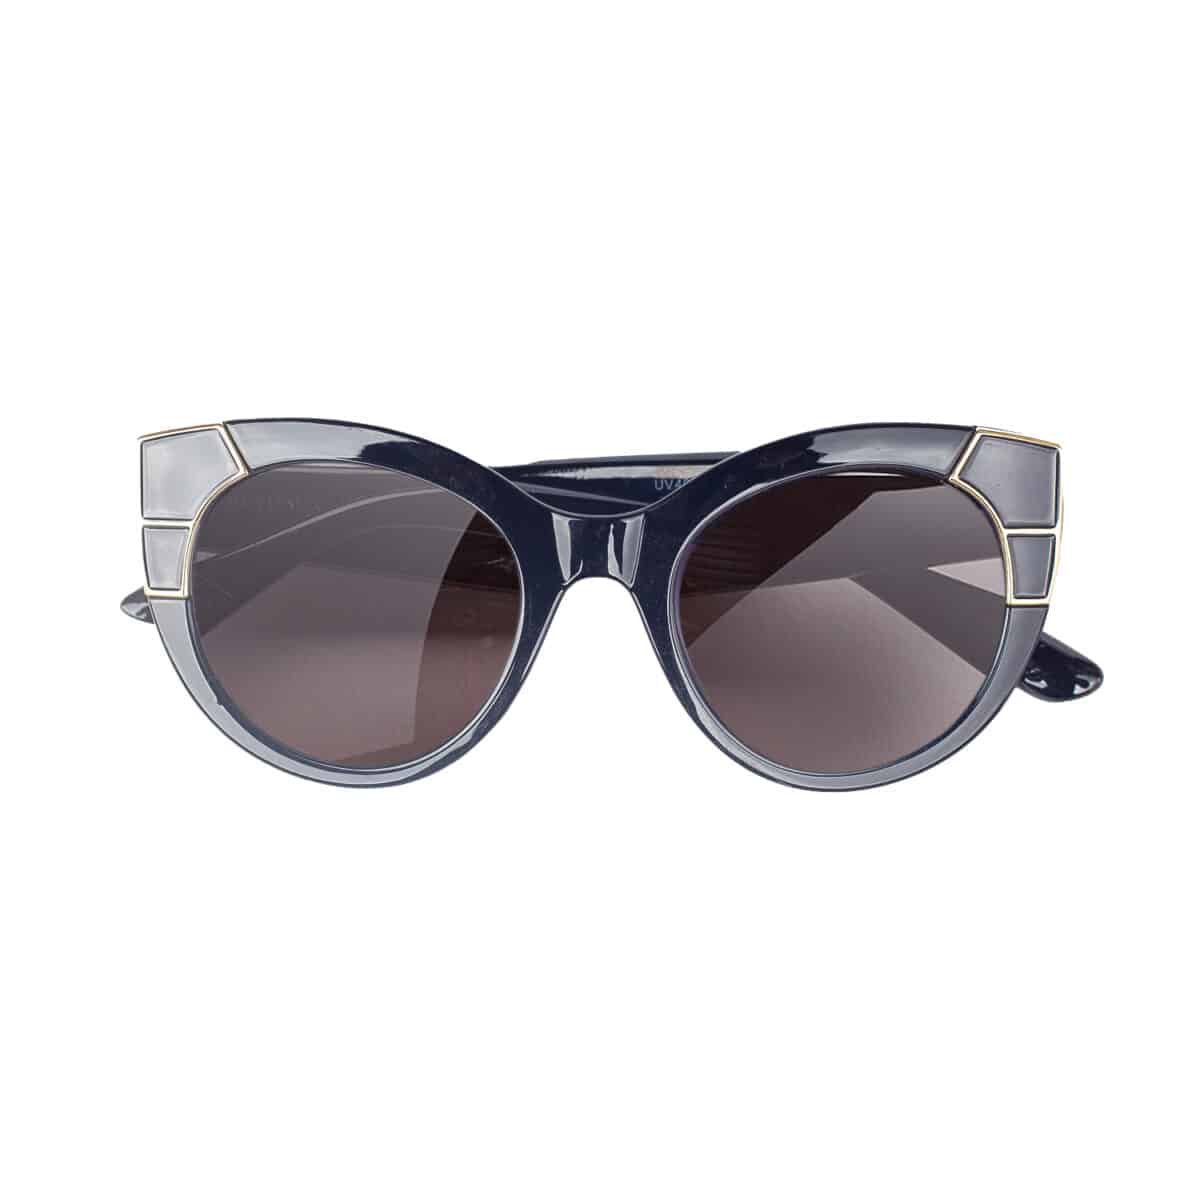 Black Geometric Design Sunglasses